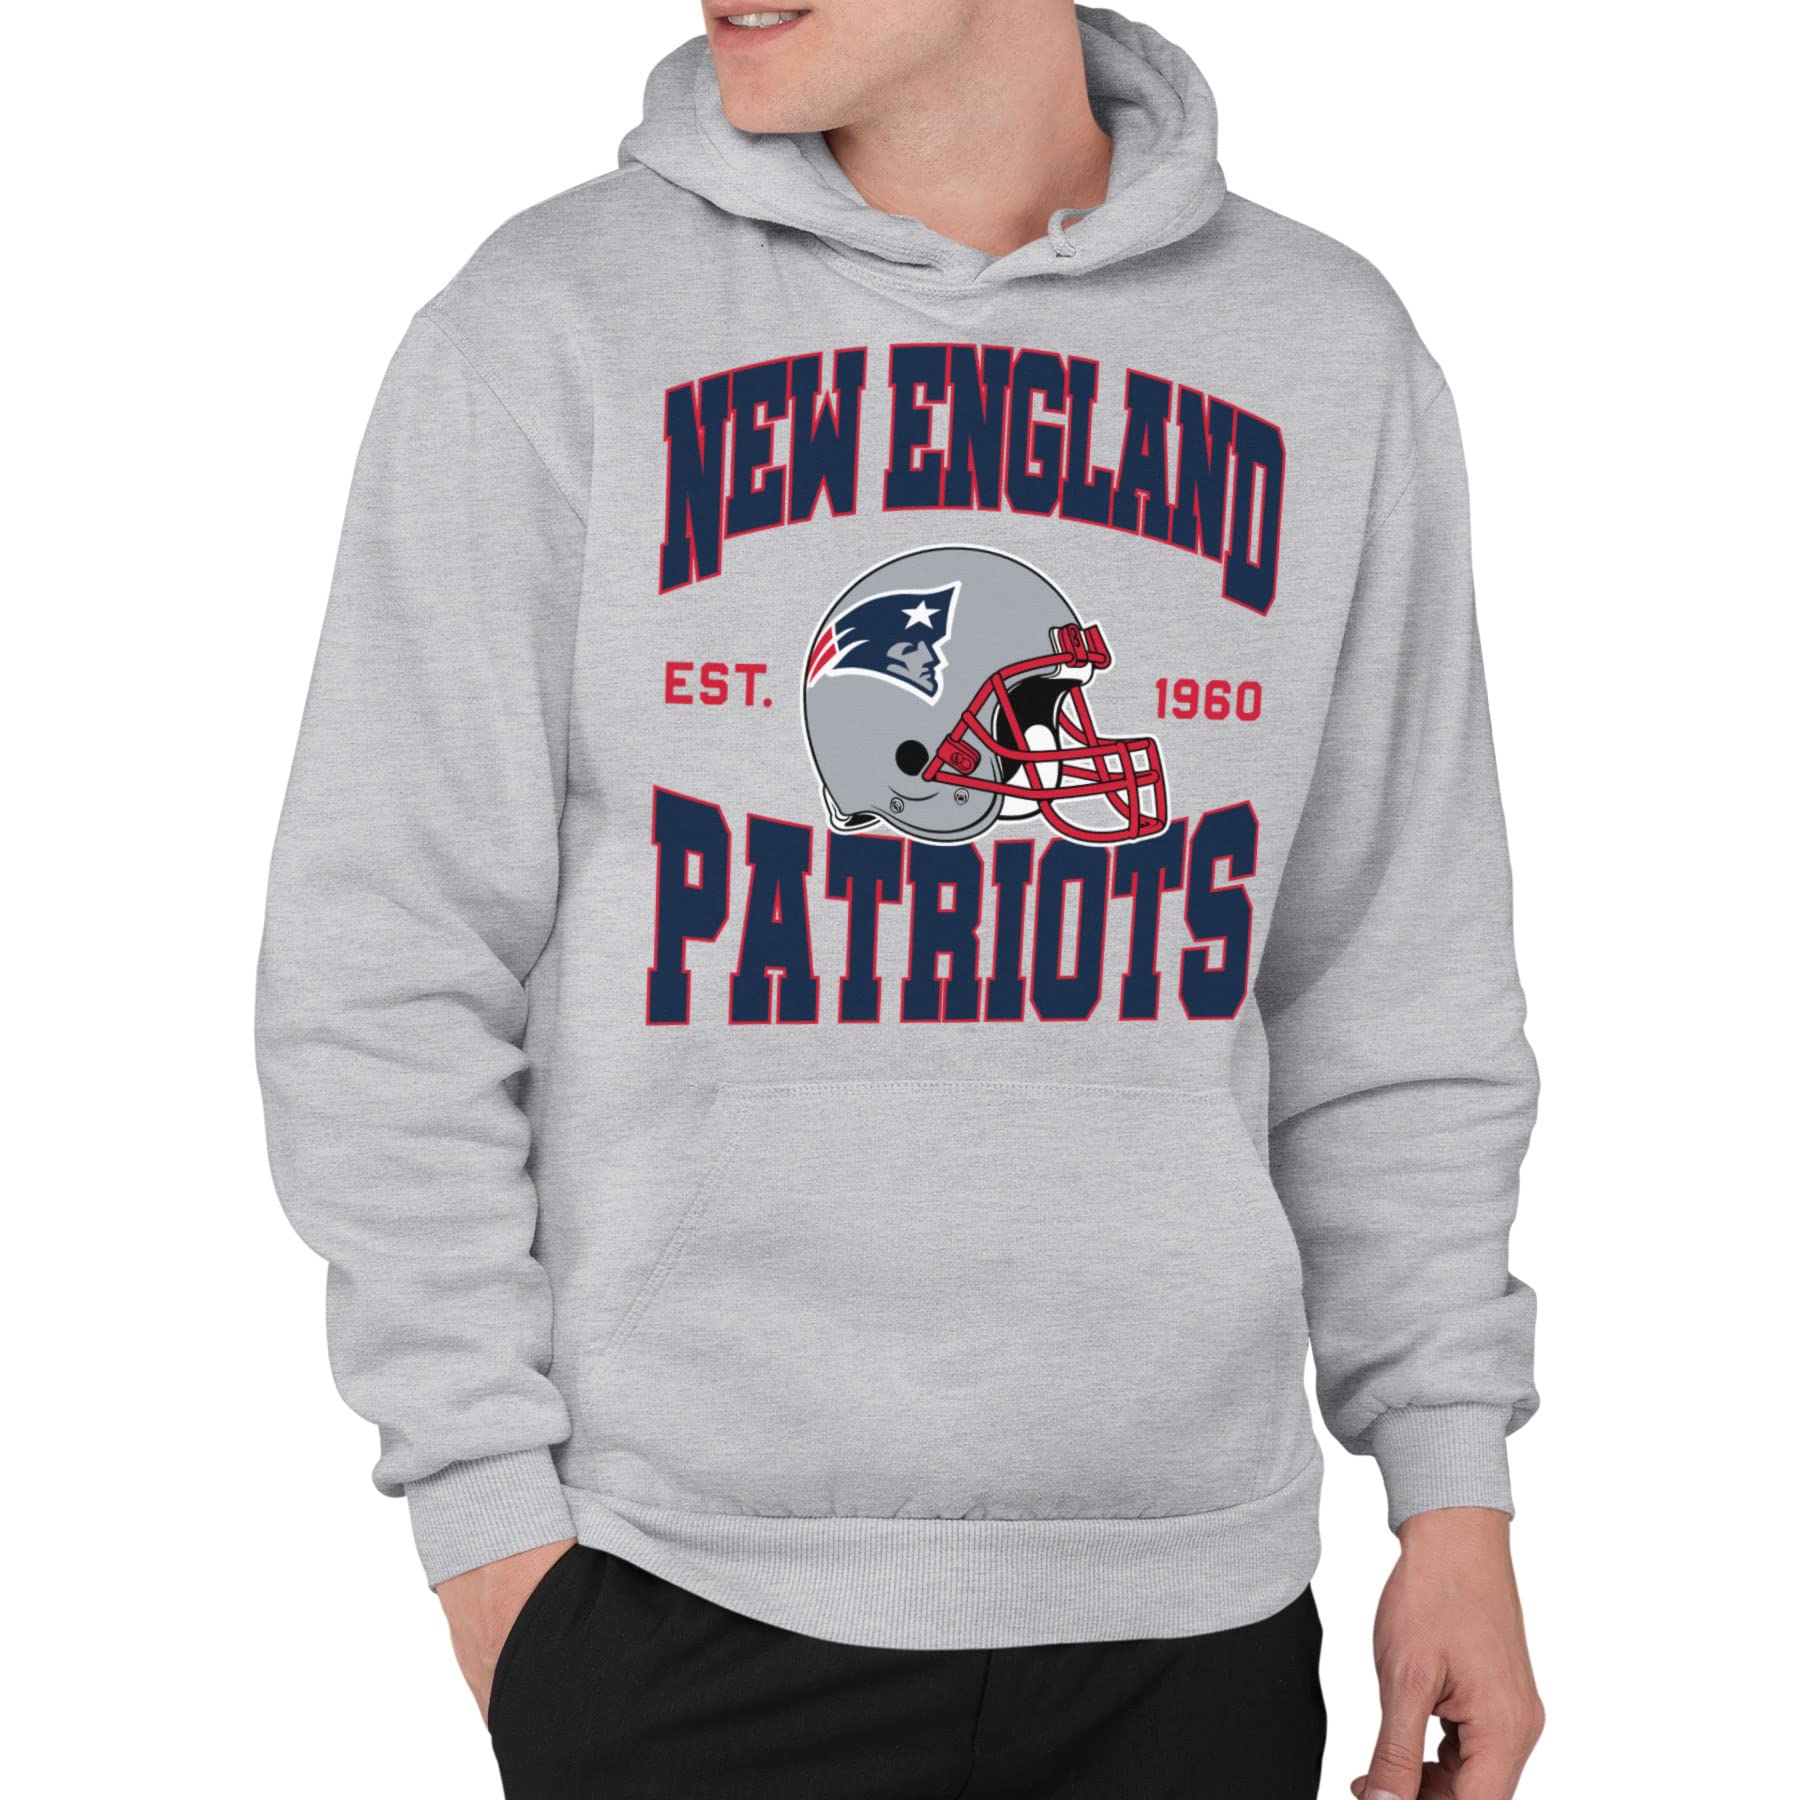 patriots hooded sweatshirt